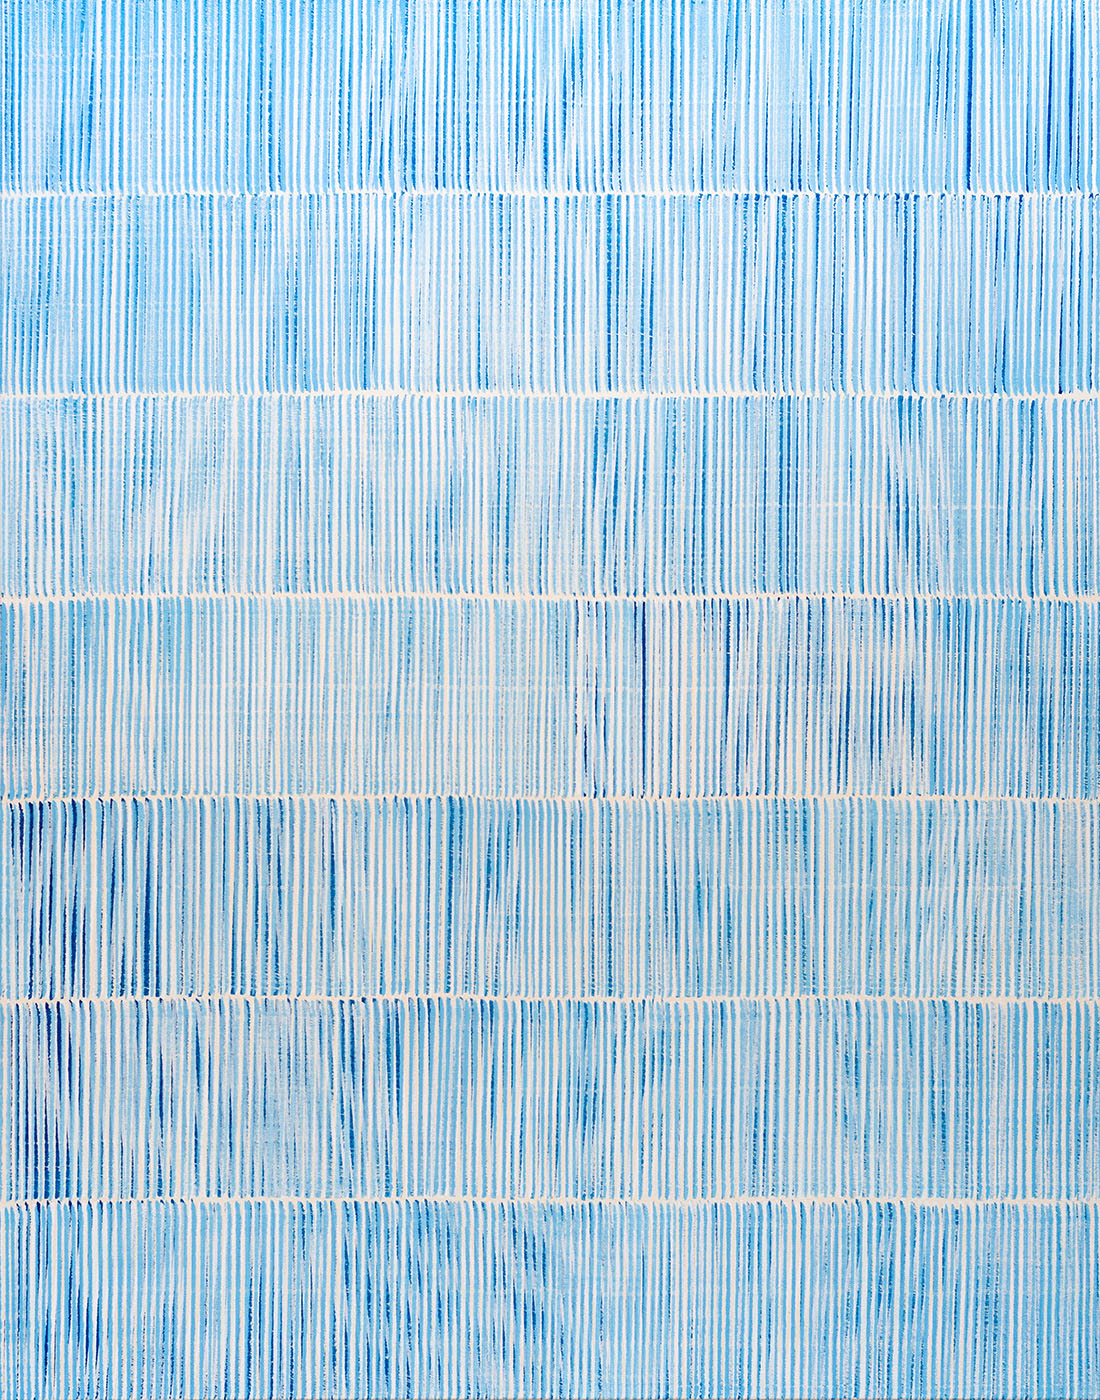 Nikola Dimitrov, FarbKlangBlau IV, 2019, Pigmente, Bindemittel auf Leinwand, 140 × 110 cm